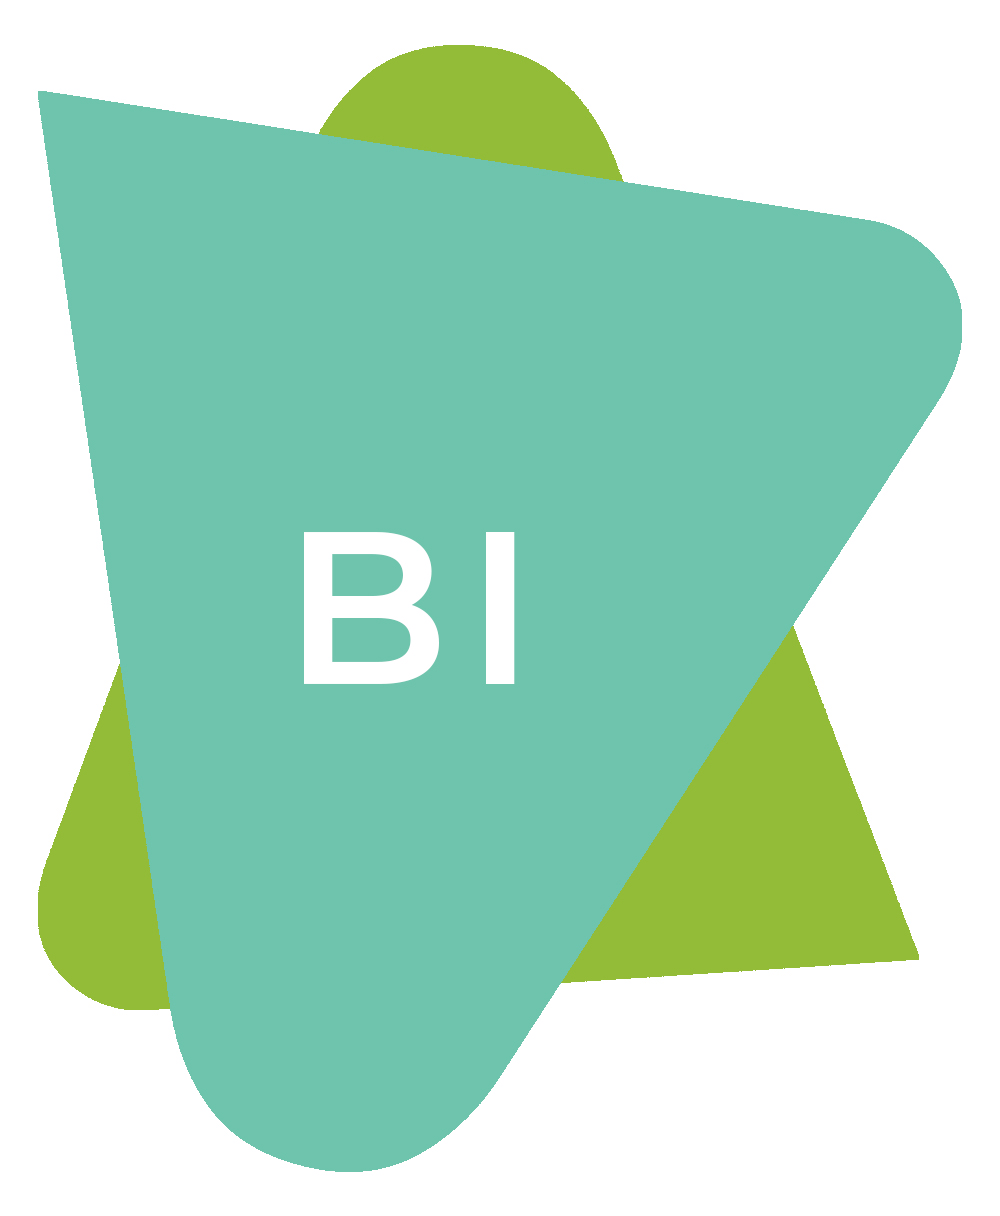 BI initialen